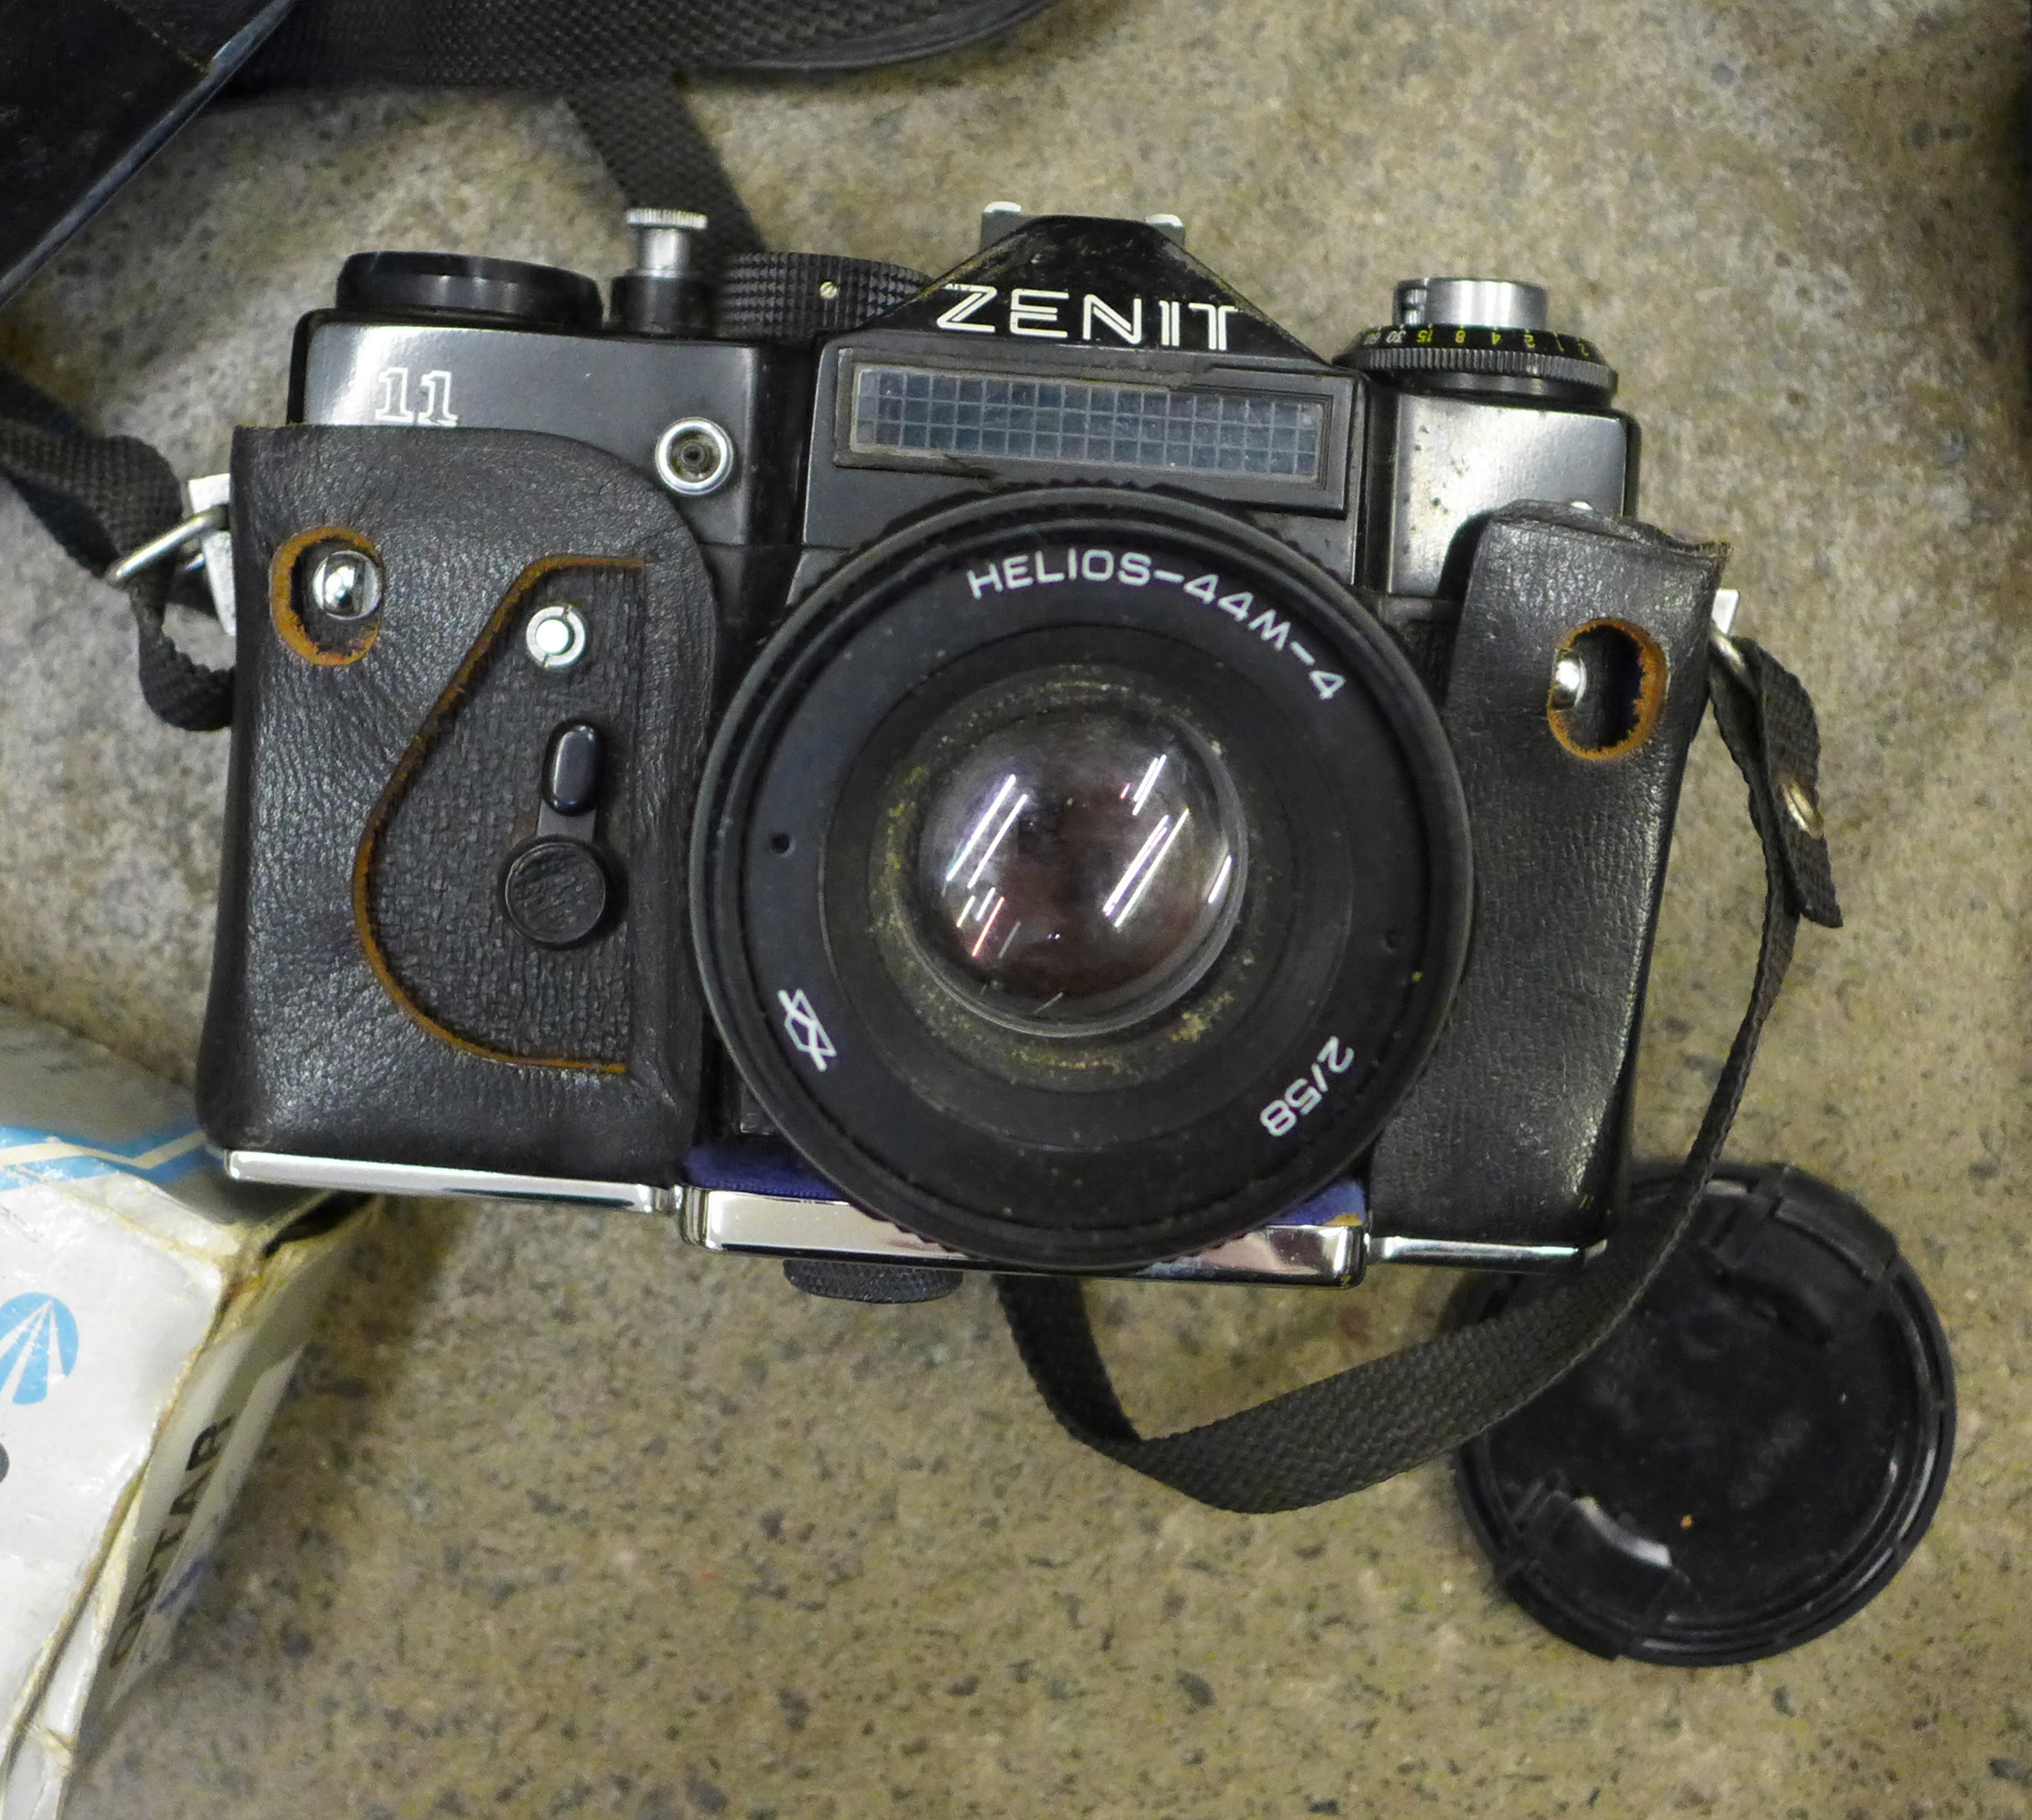 A collection of cameras including Exakta, Bella, Polaroid, Zenit, etc. - Image 4 of 4